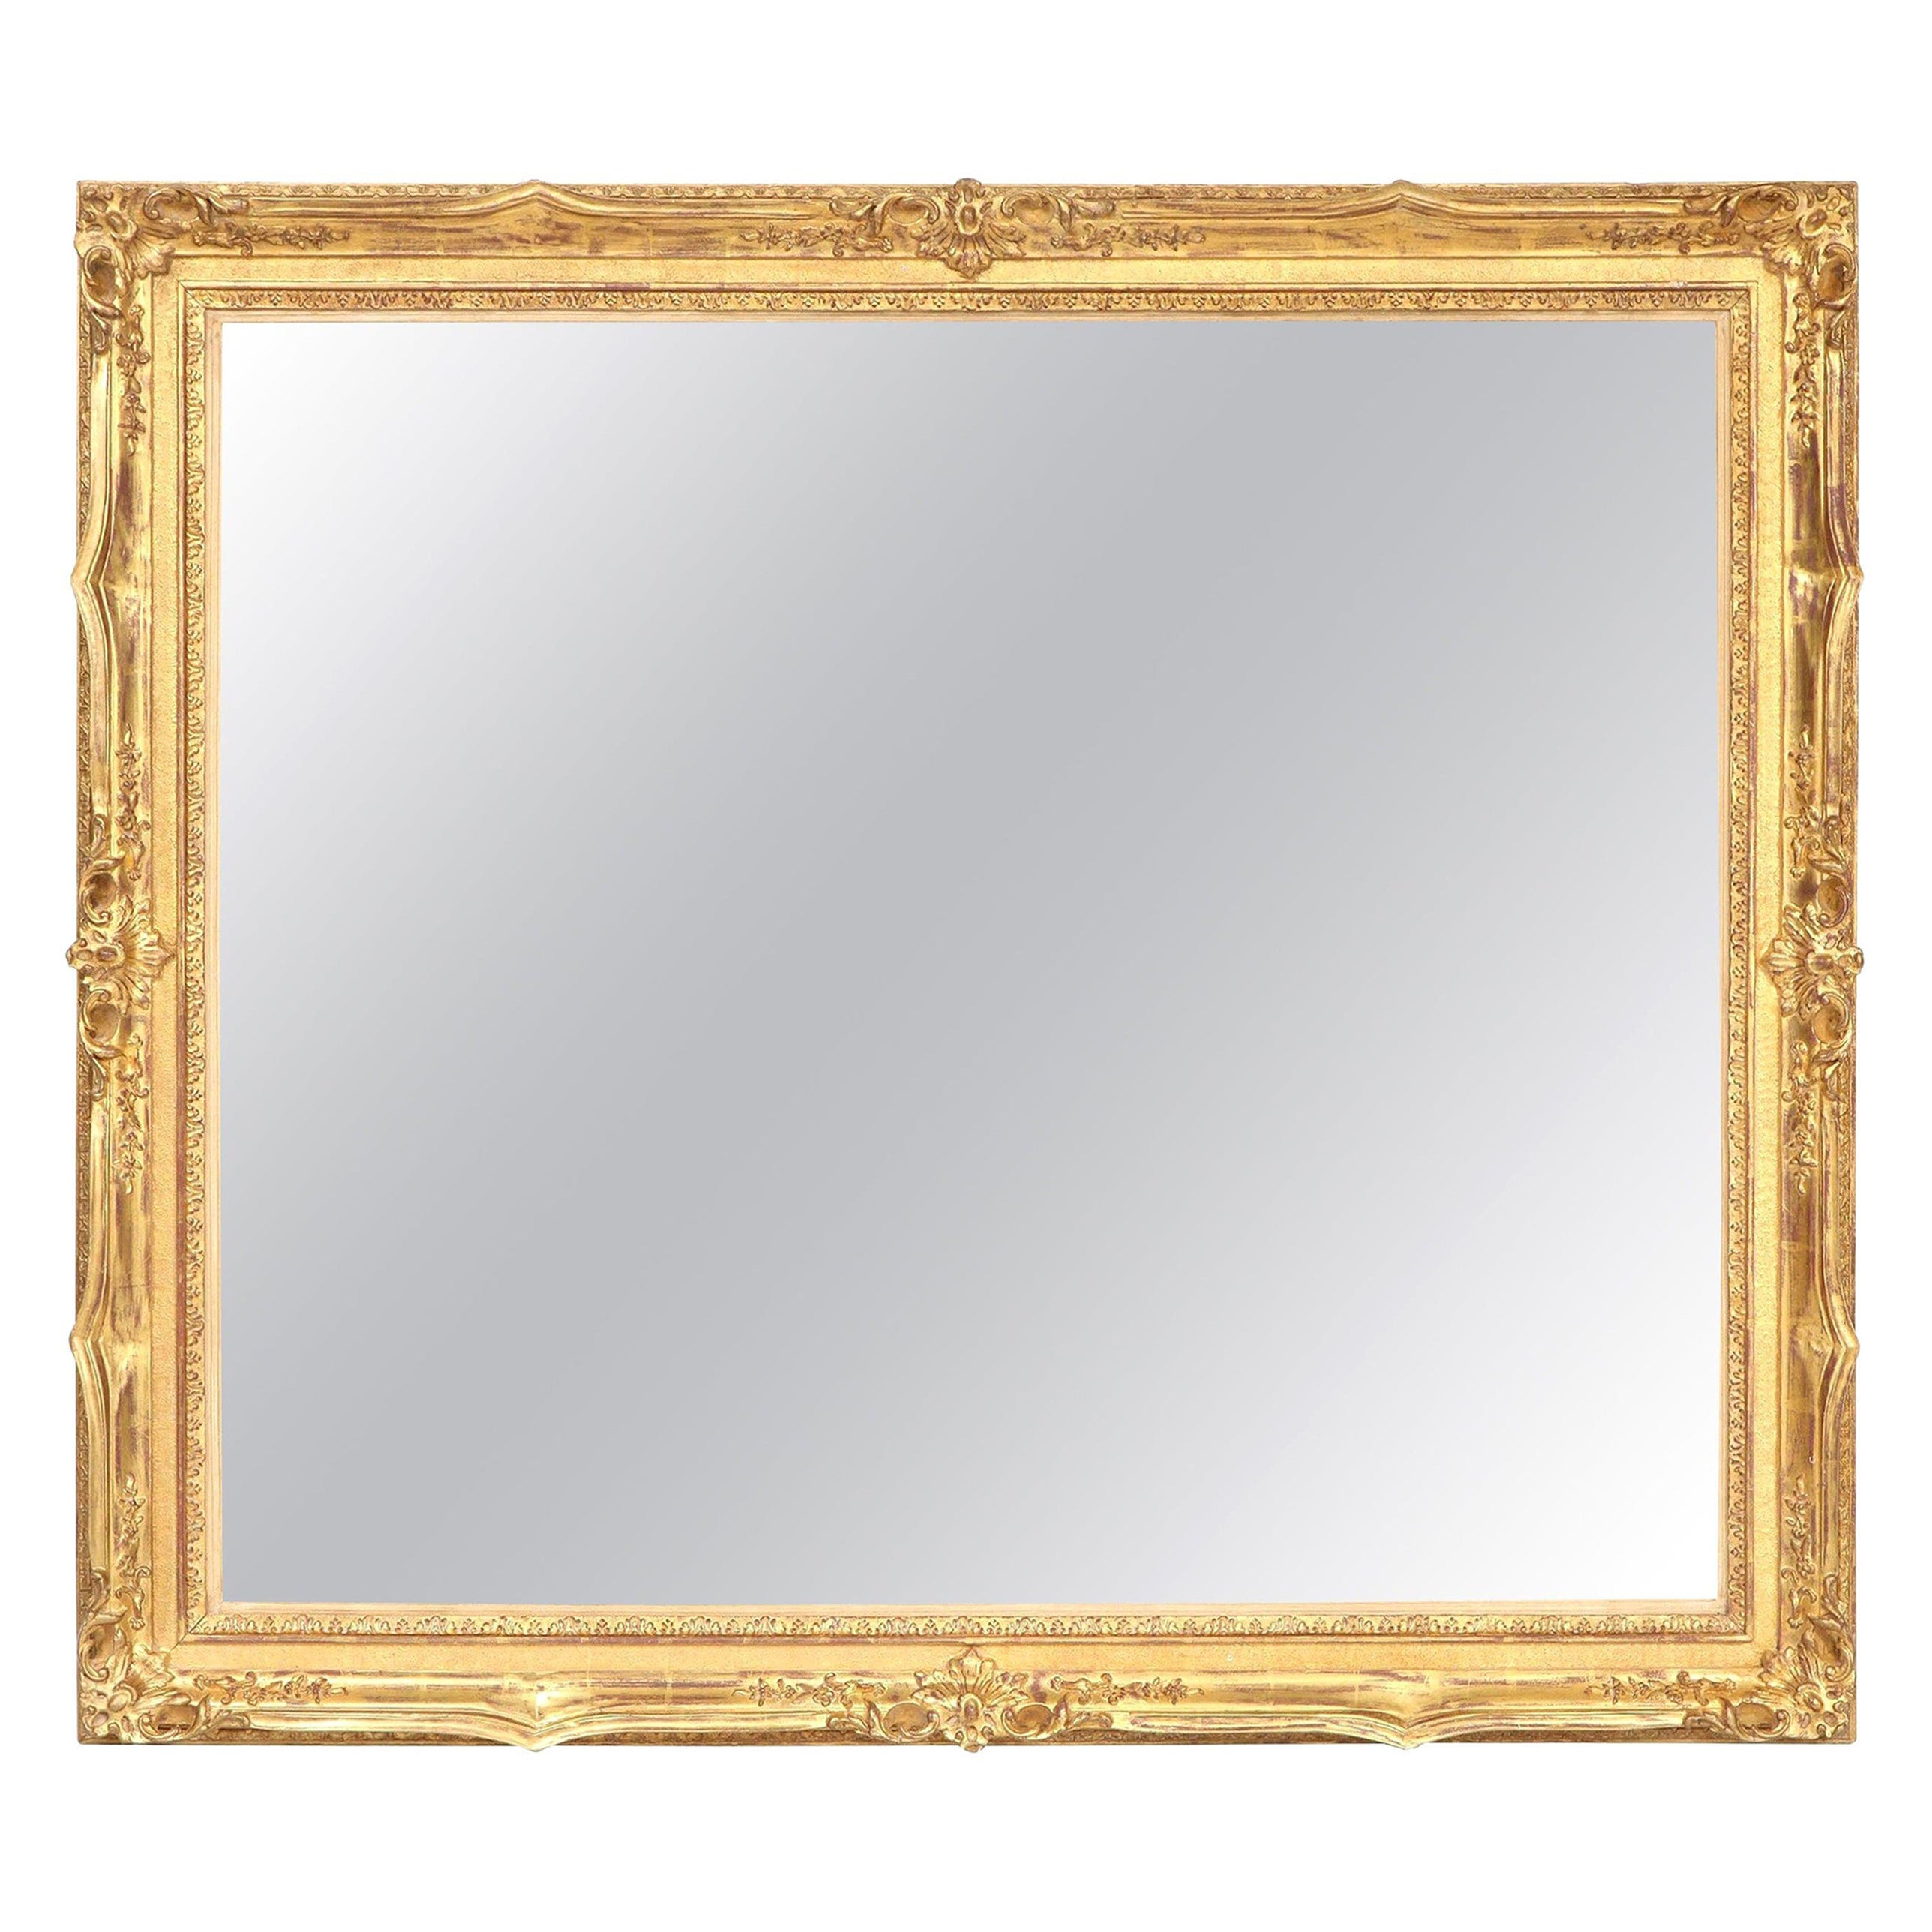 Mirror, Decorative Large Mirror, Antique Wall Mirror, Gold Leaf Frame